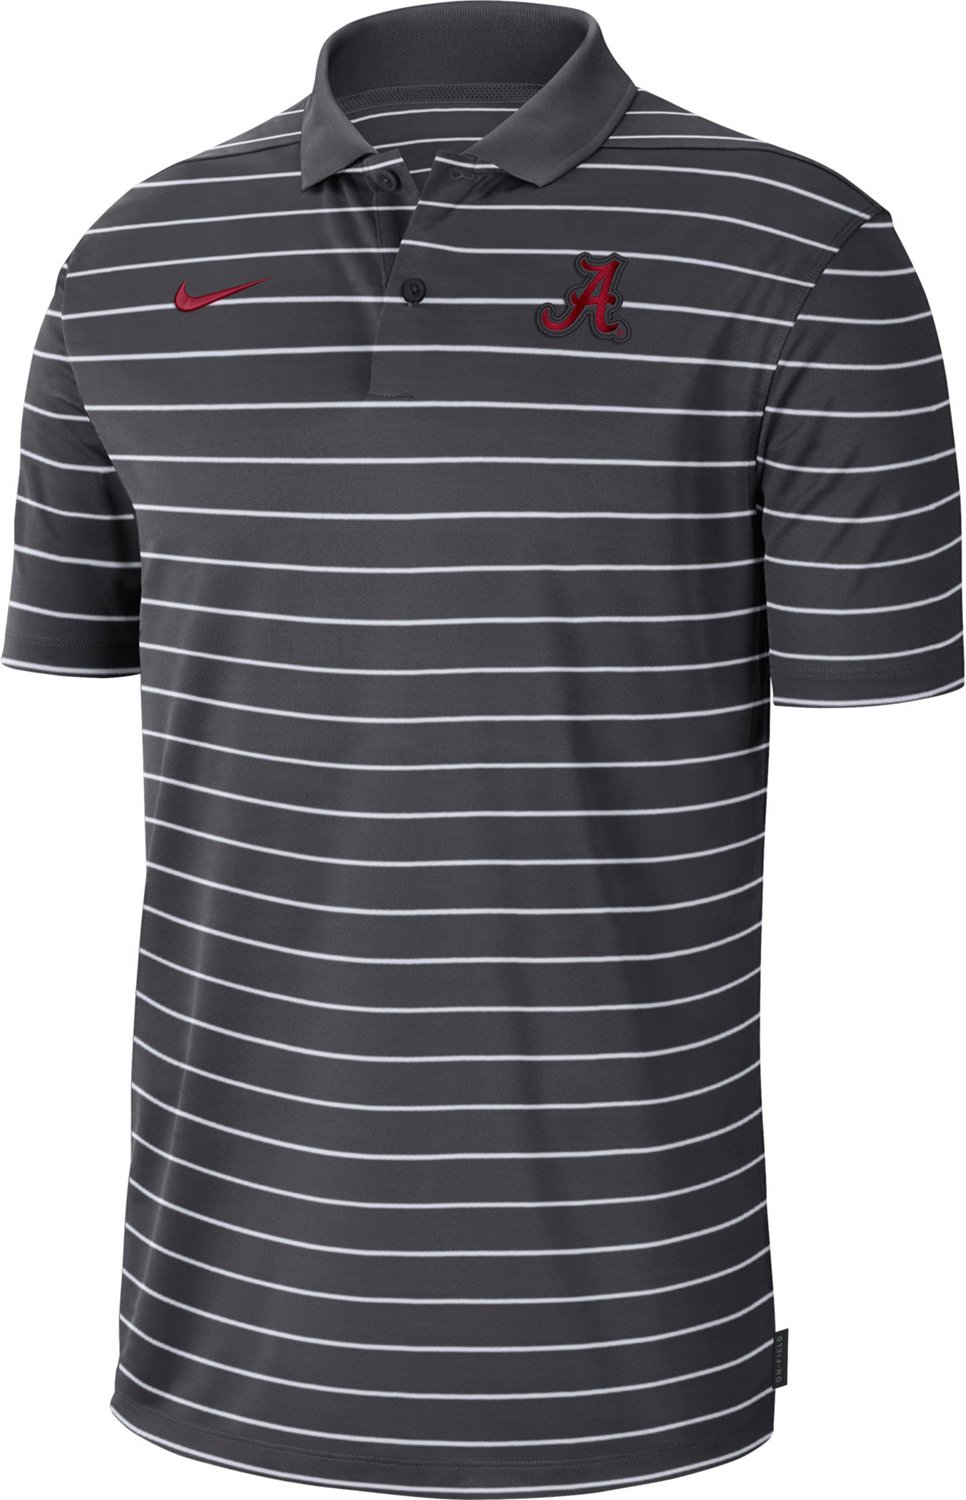 Nike, Shirts, Cleveland Indians Nike Polo With Wahoo Logo